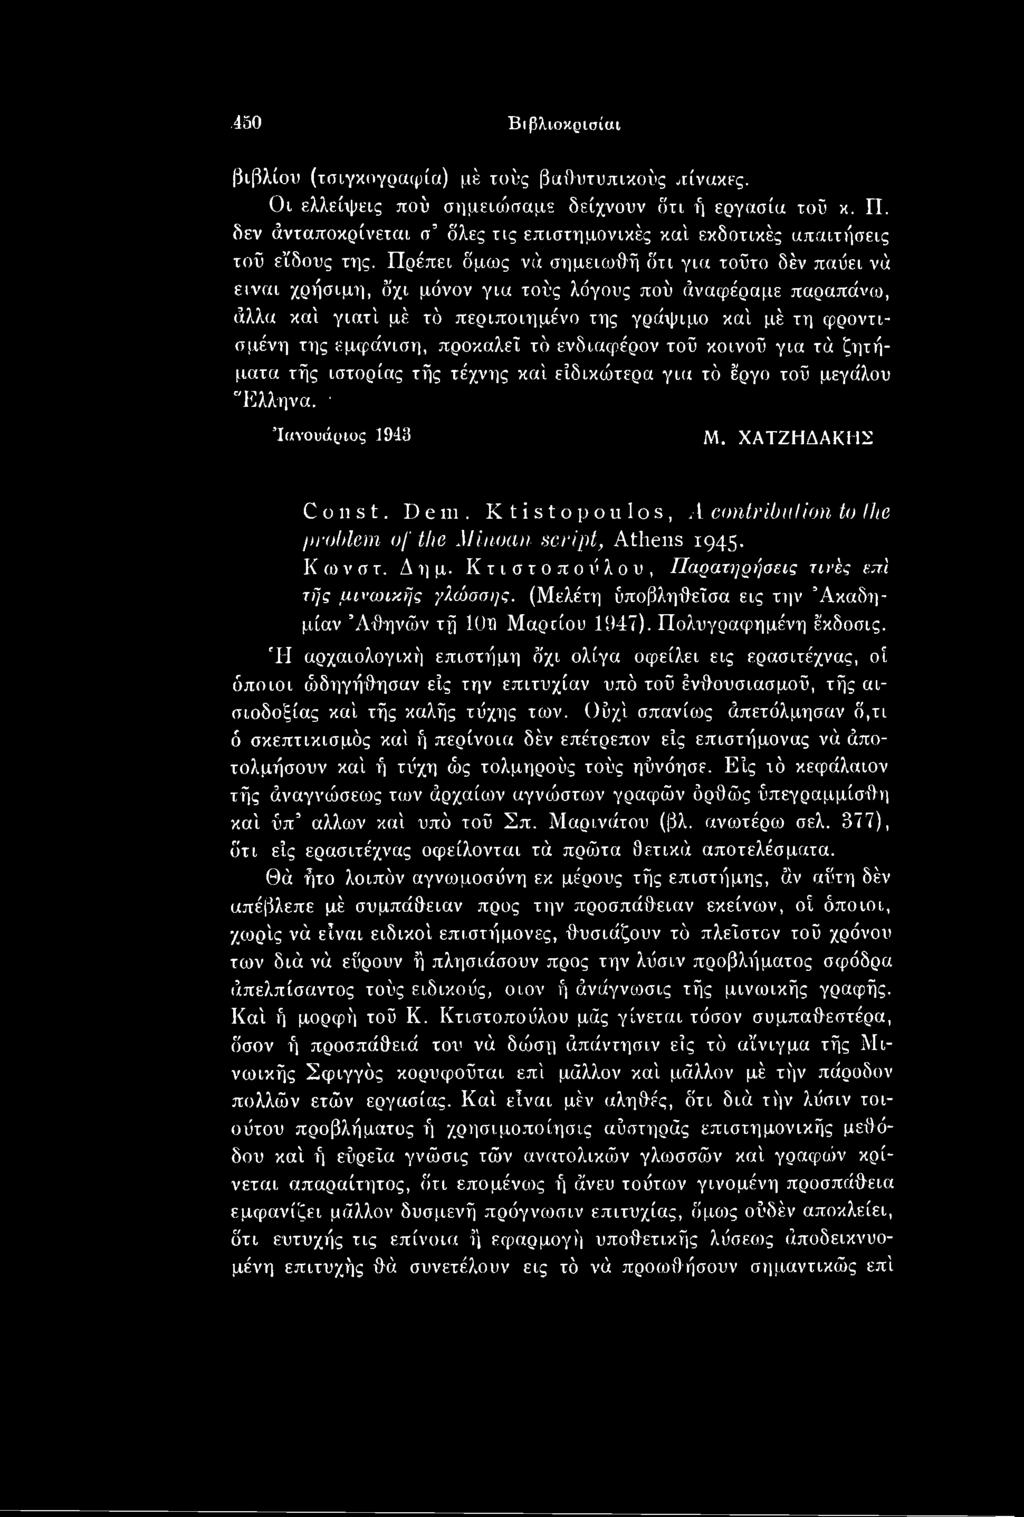 Ktistopoulos, A contribution to the problem of the Minoan script, Athens 1945. Κωνστ. Δη μ. Κτιστοπούλου, Παρατηρήσεις τυ ές επί τής μινωικής γλώσσης.